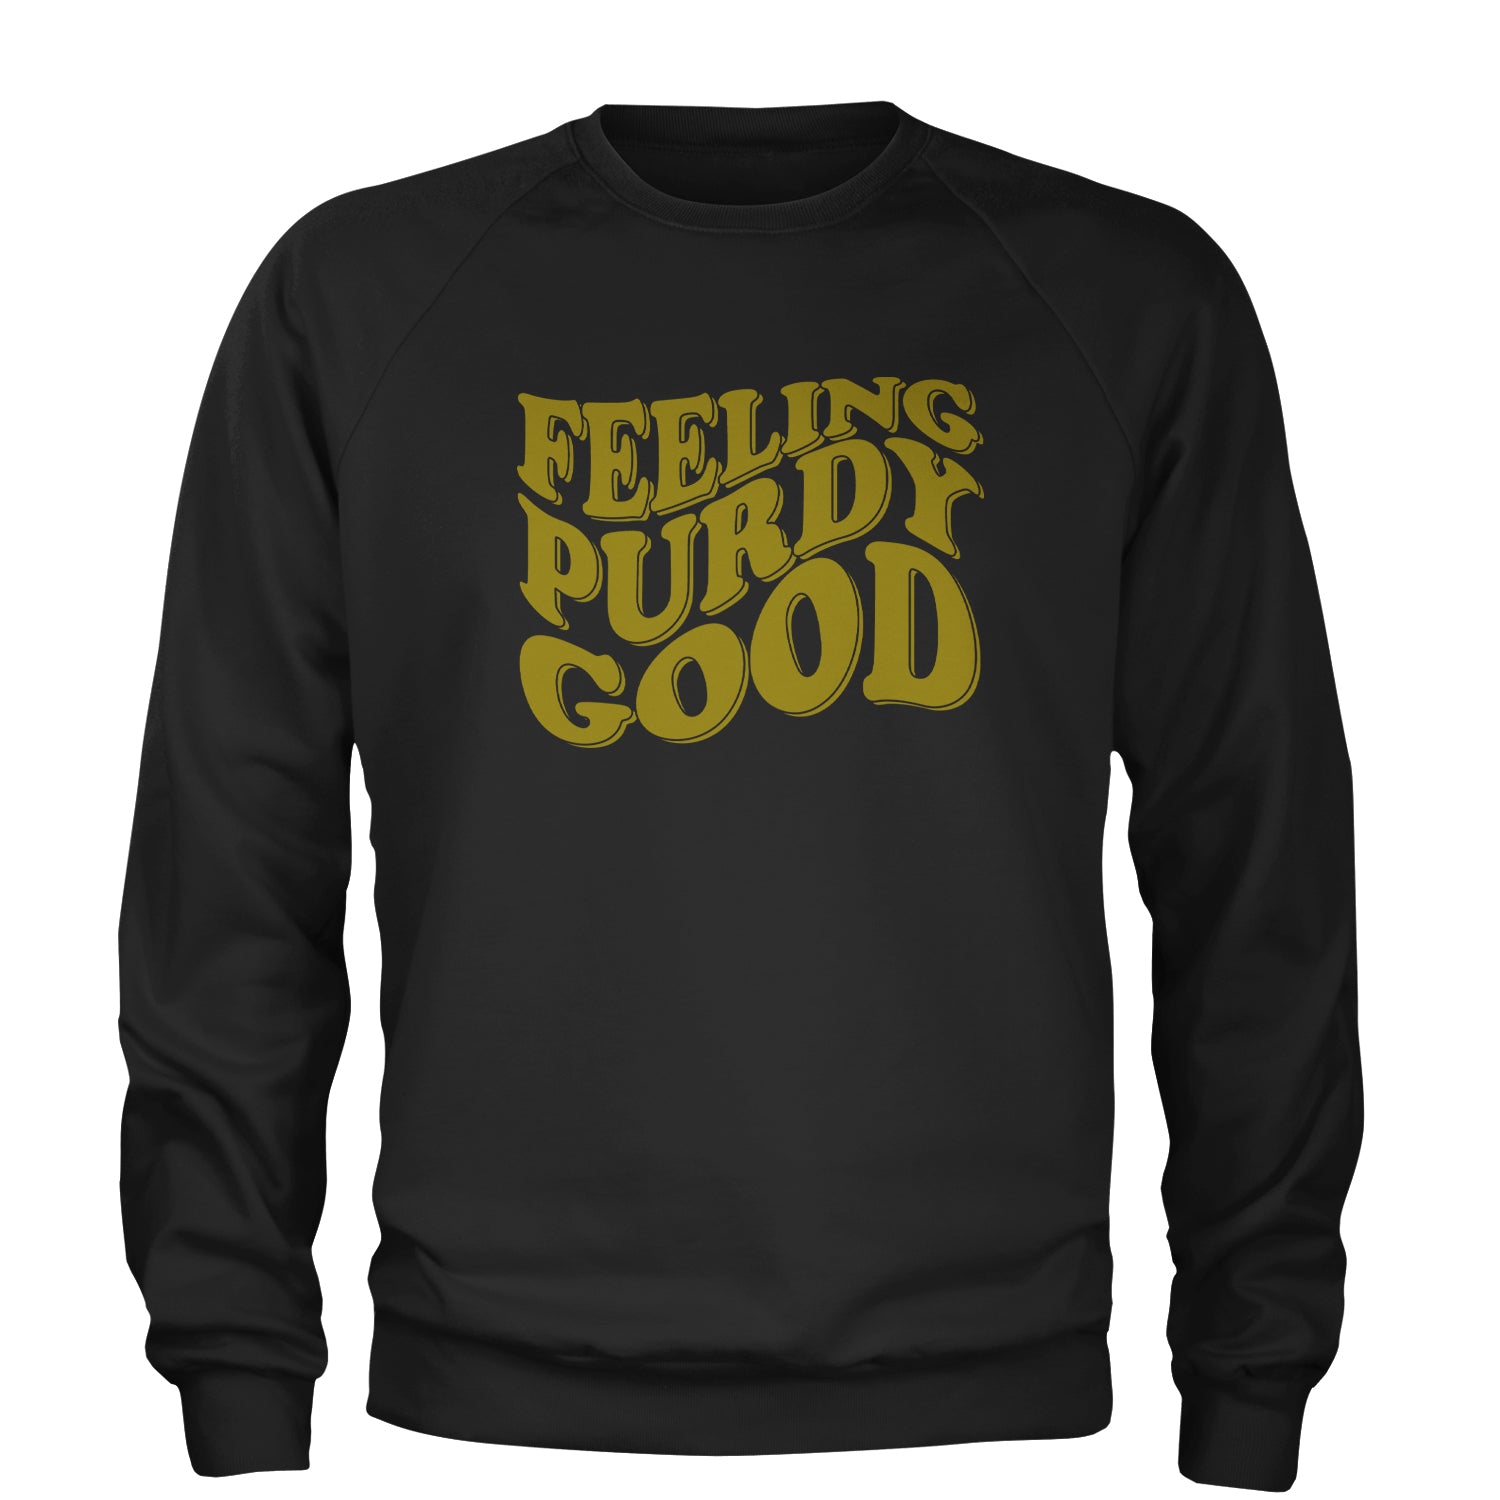 Feeling Purdy Good Adult Crewneck Sweatshirt 13, football by Expression Tees